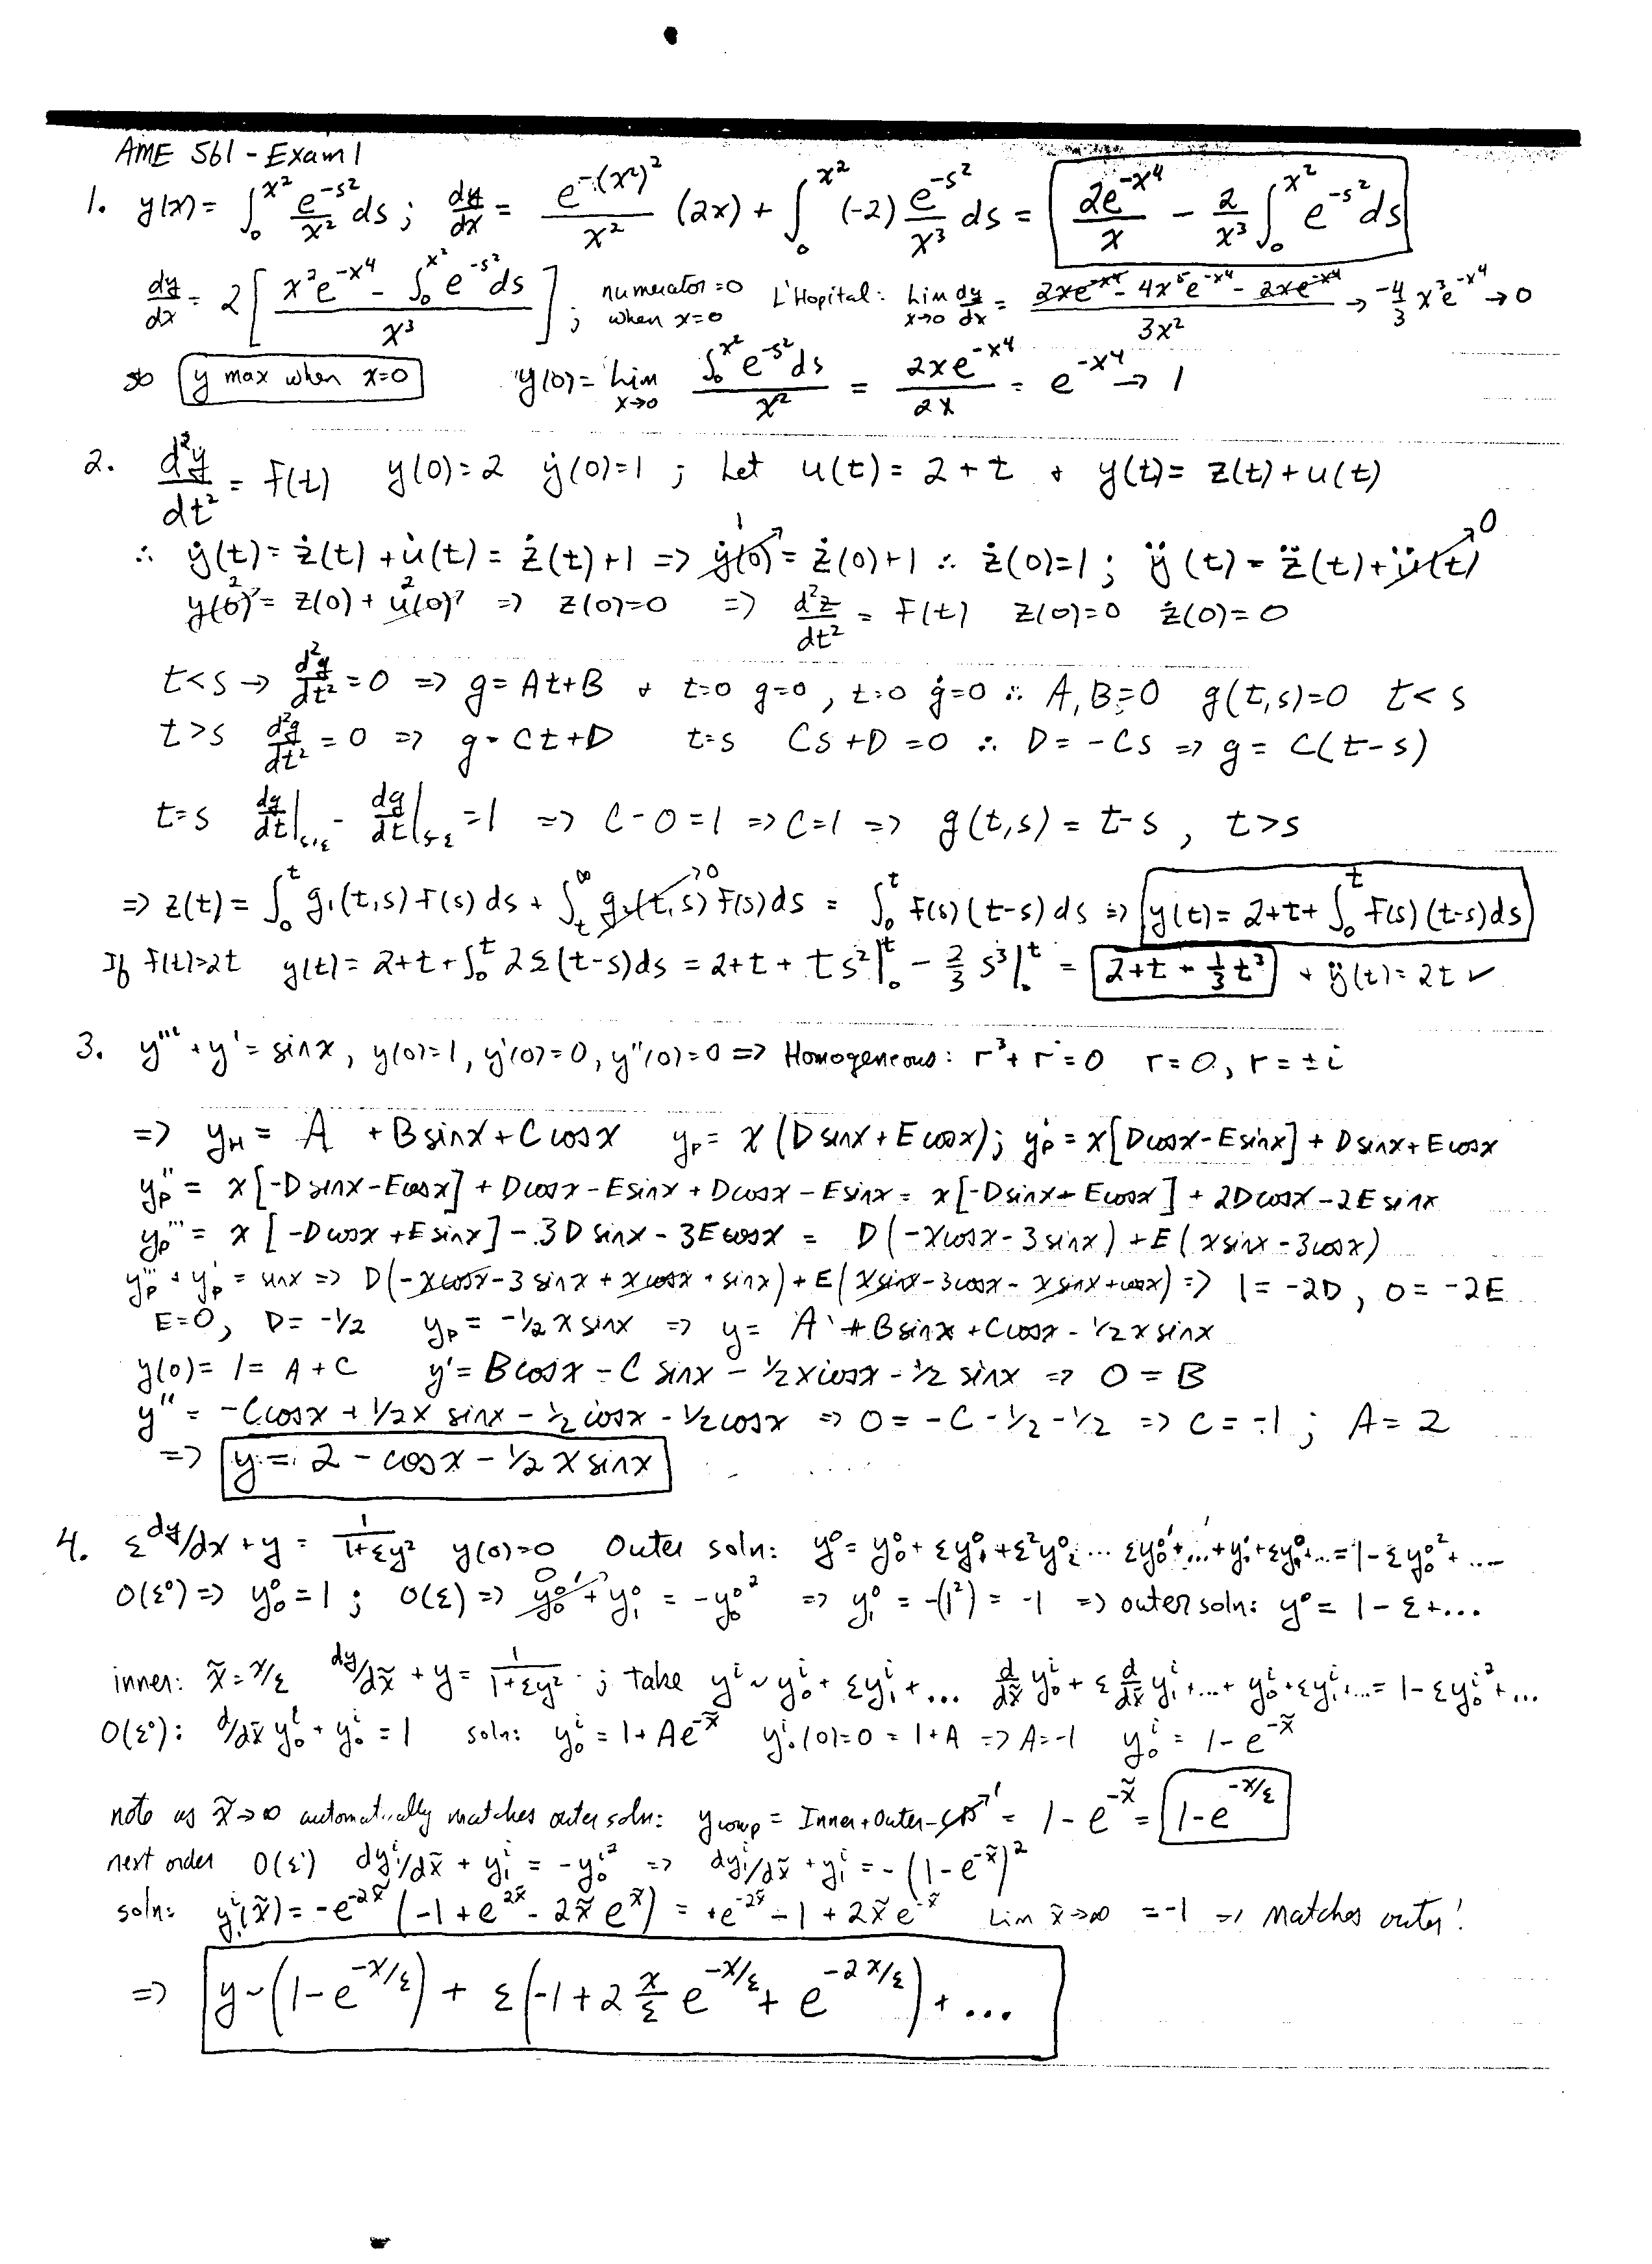 latex template for math homework